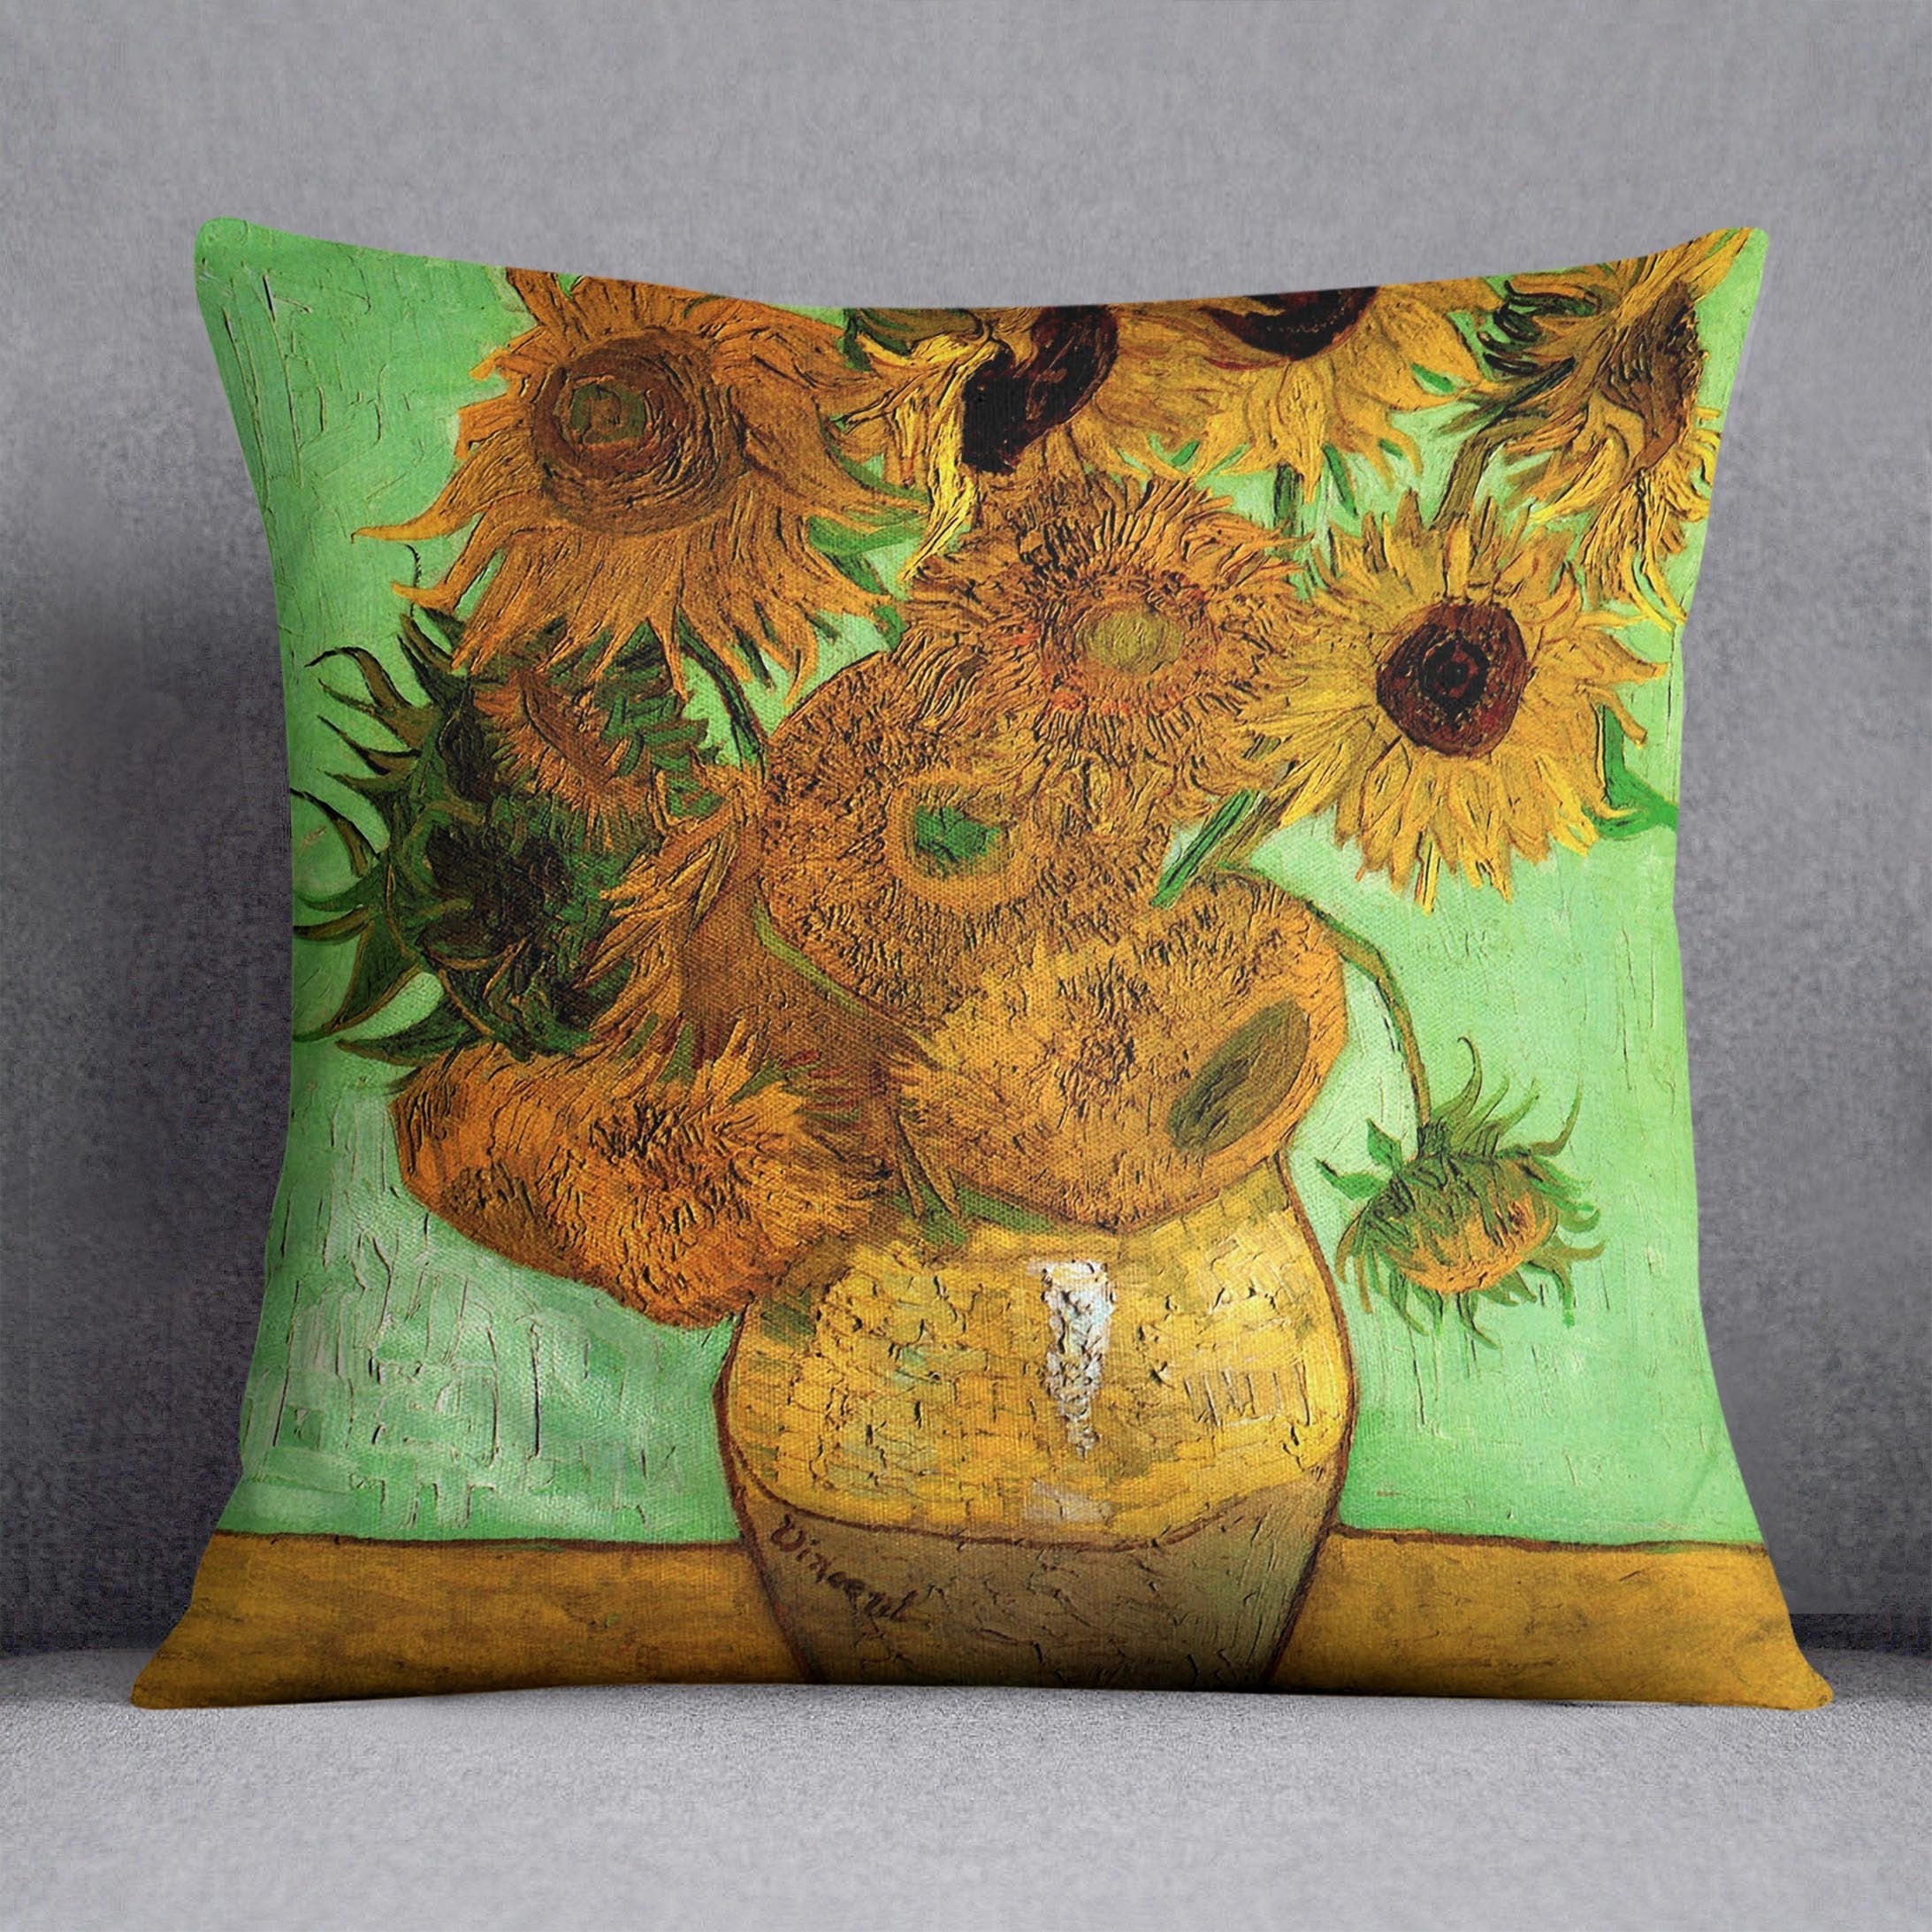 Still Life Vase with Twelve Sunflowers 2 by Van Gogh Throw Pillow